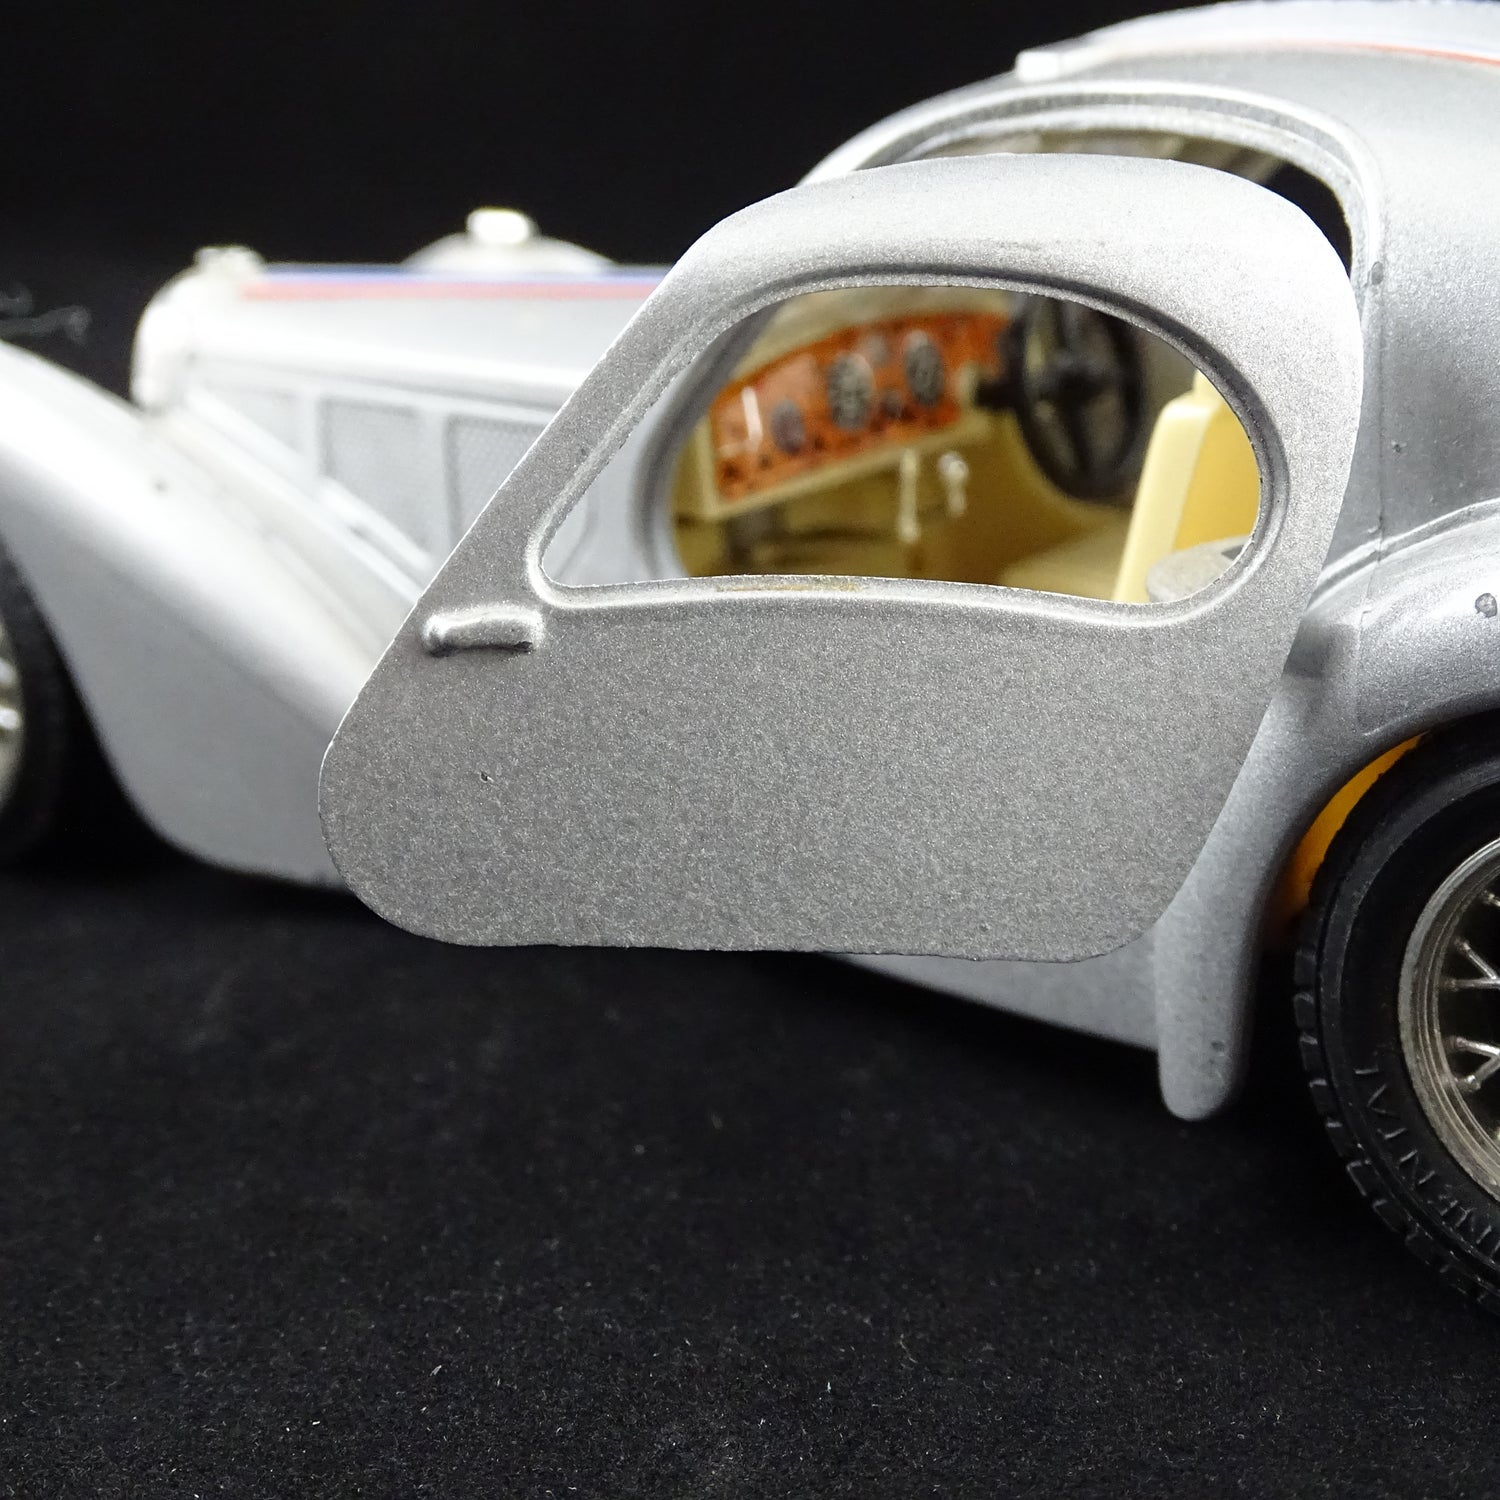 Voiture miniature de collection Bugatti d'occasion - BURAGO – Lutin Vert -  Recyclerie de jouets